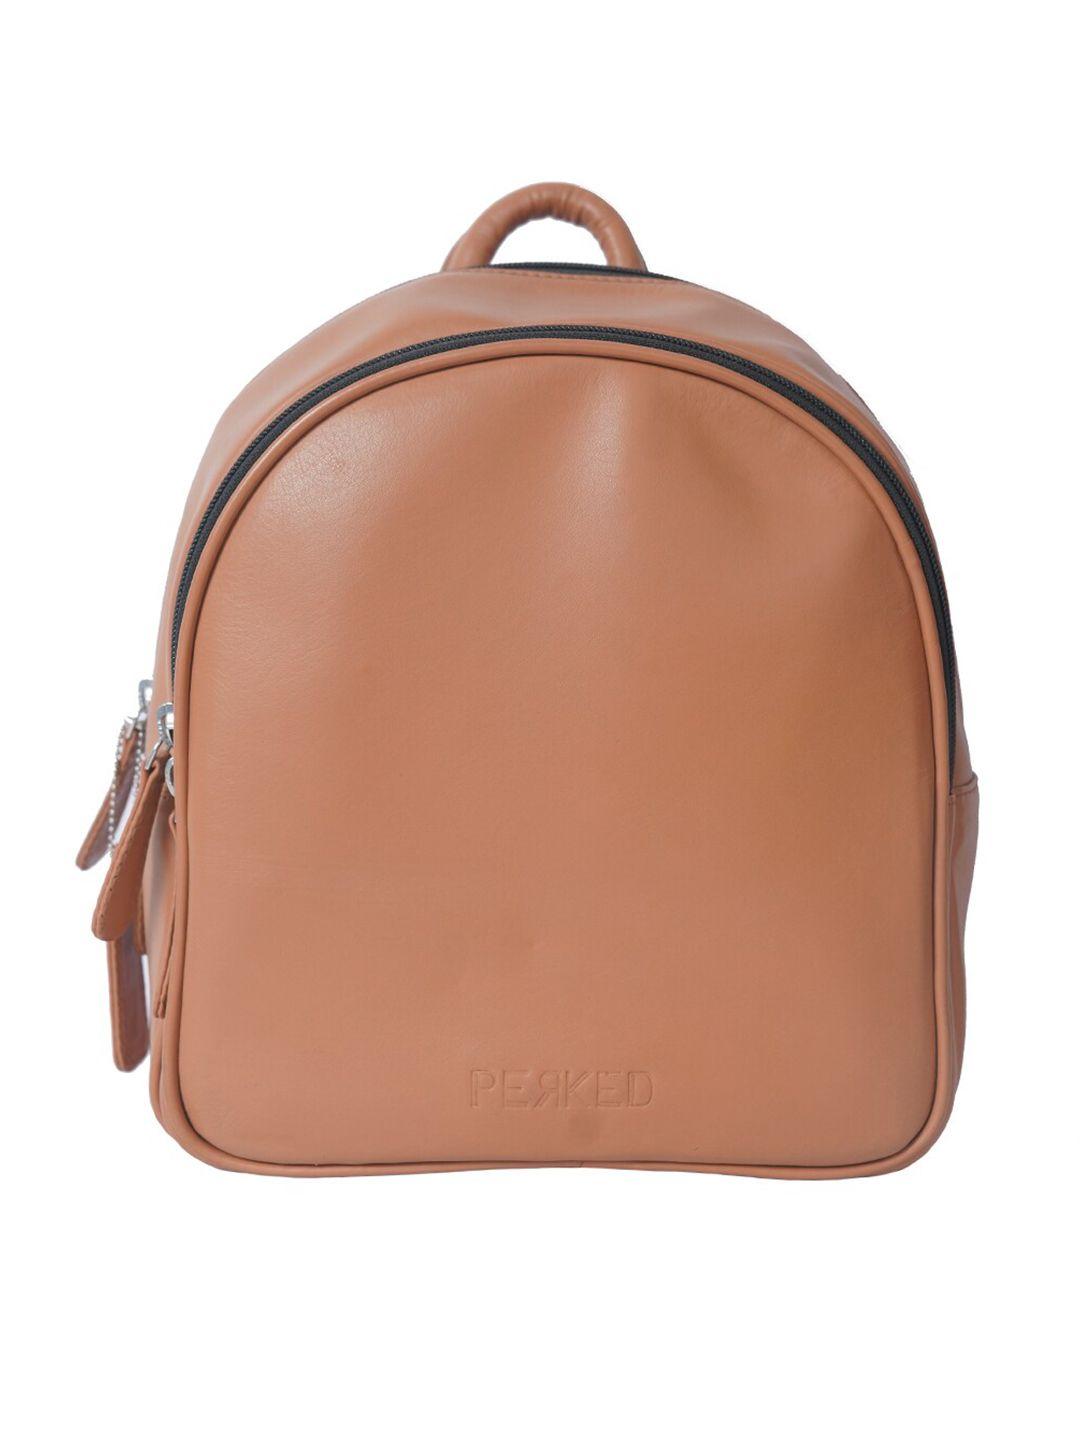 perked-women-camel-brown-backpack